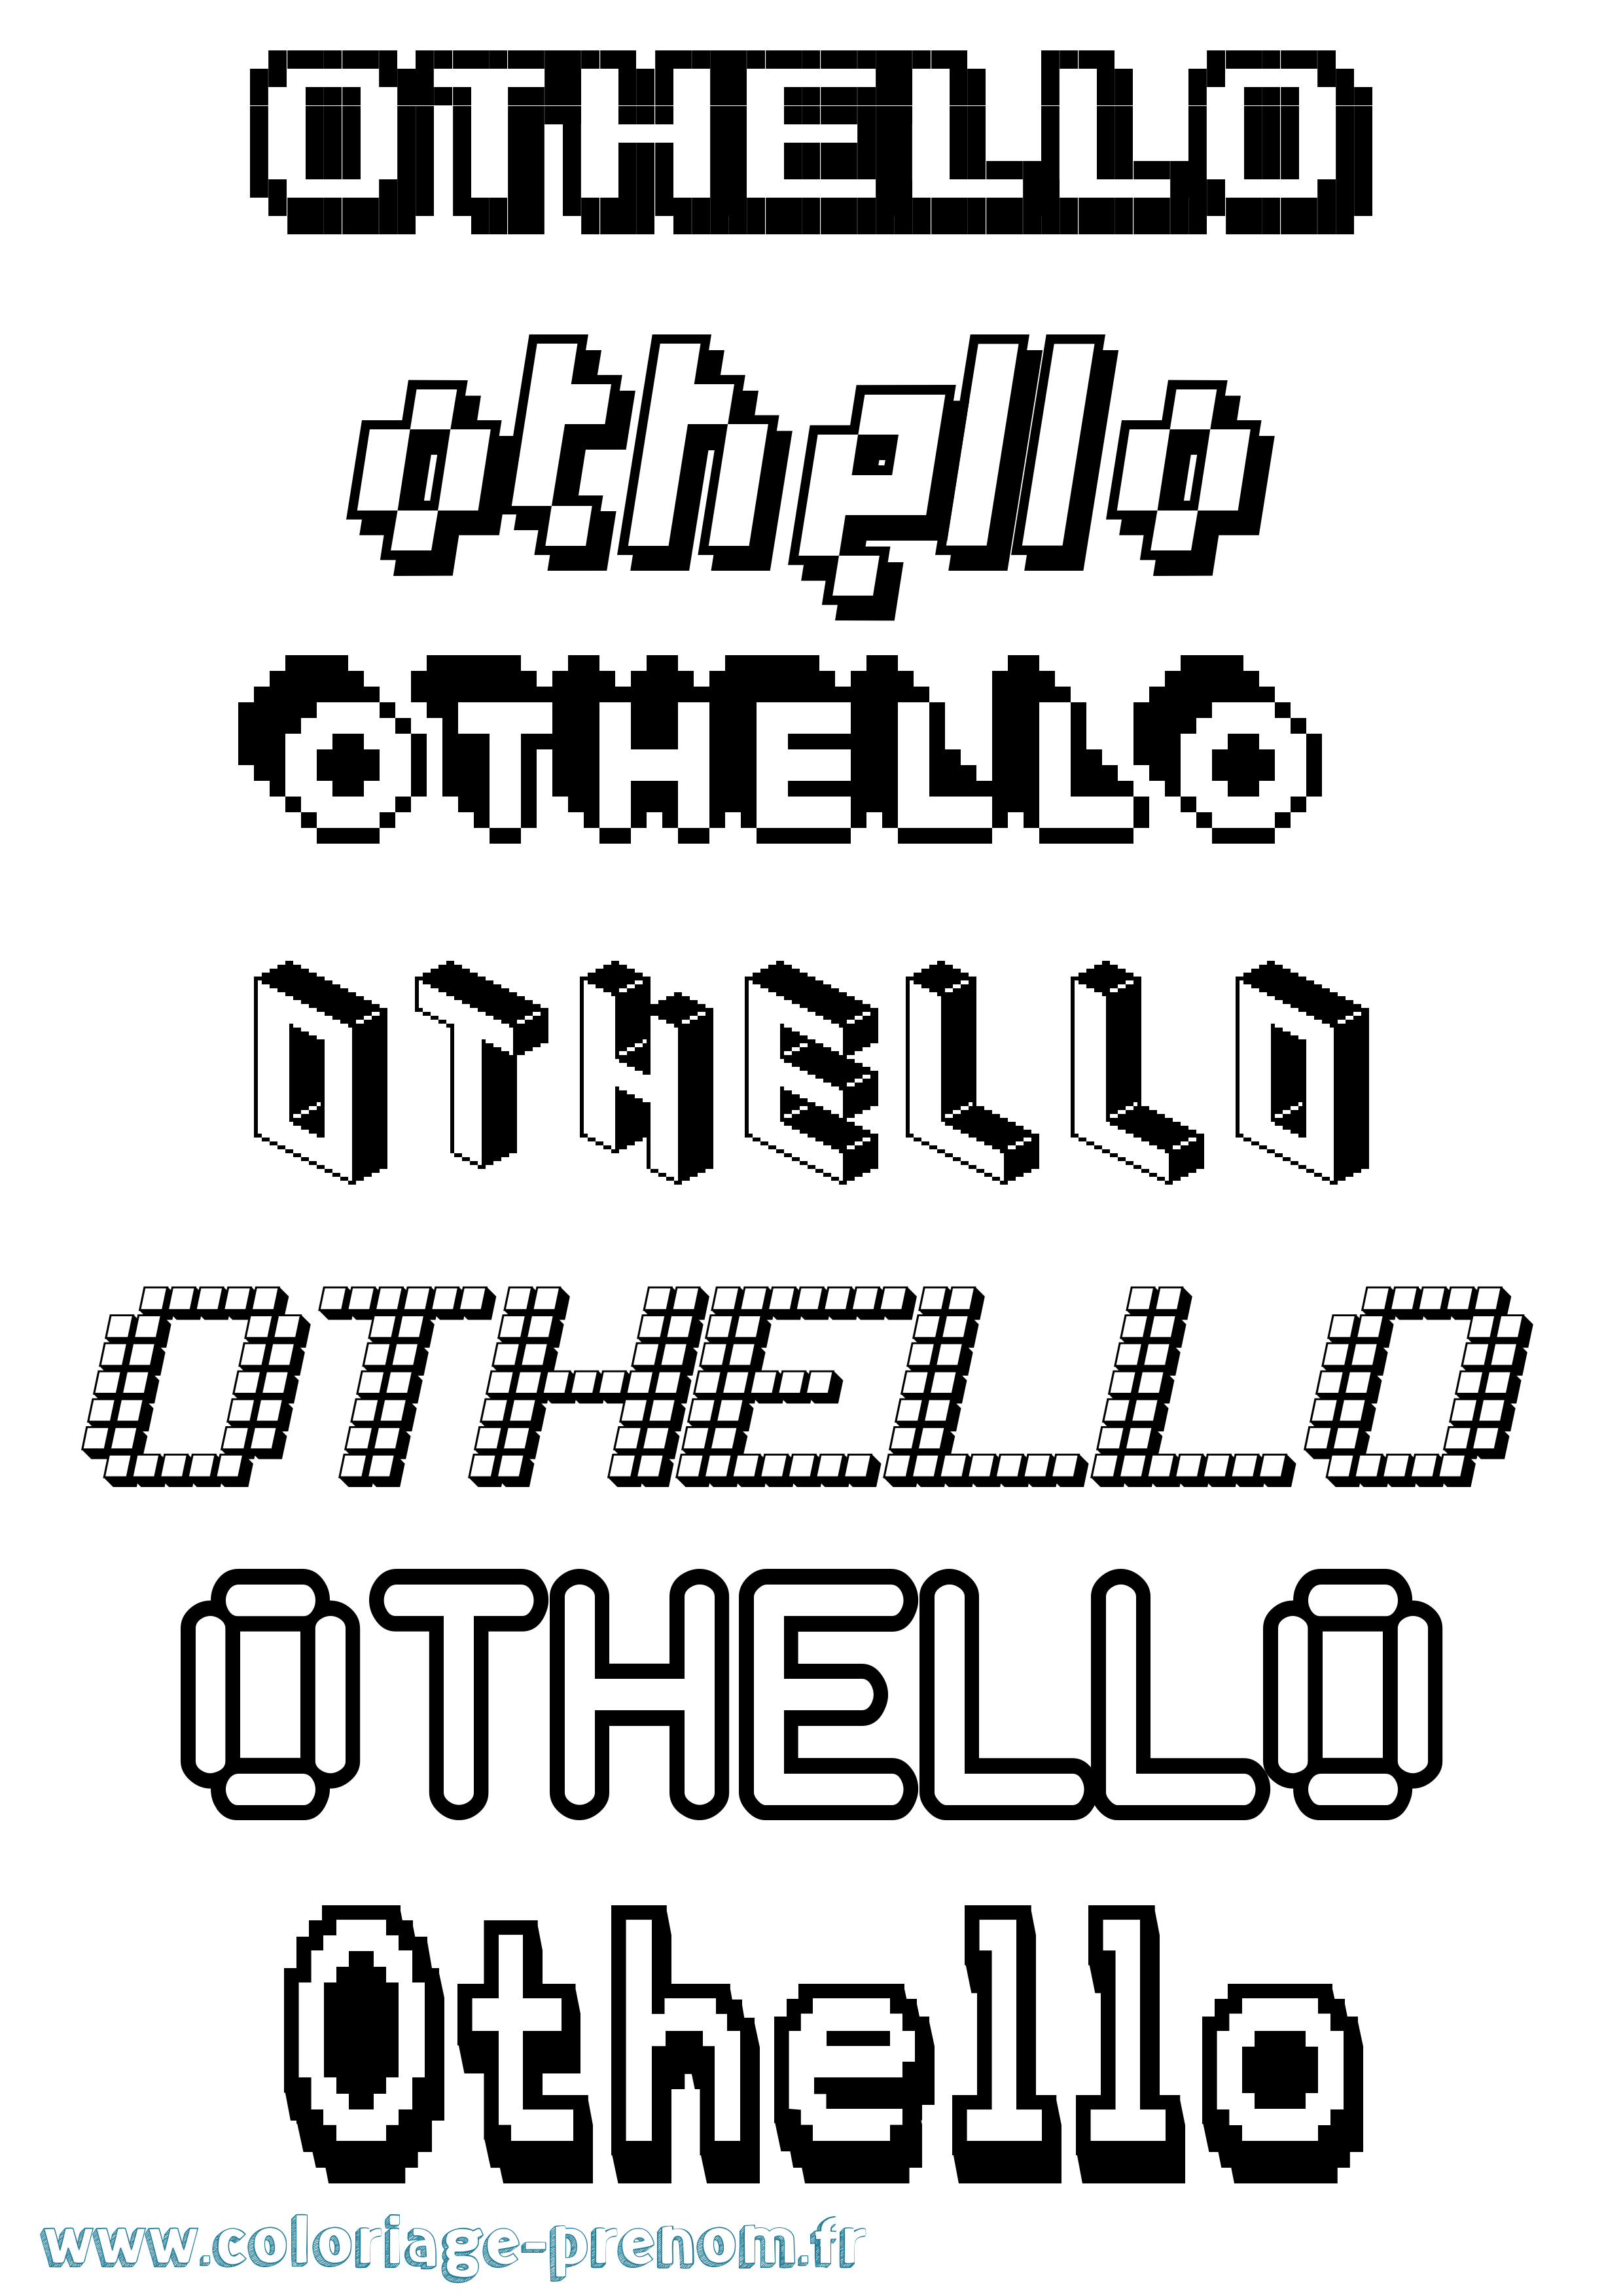 Coloriage prénom Othello Pixel